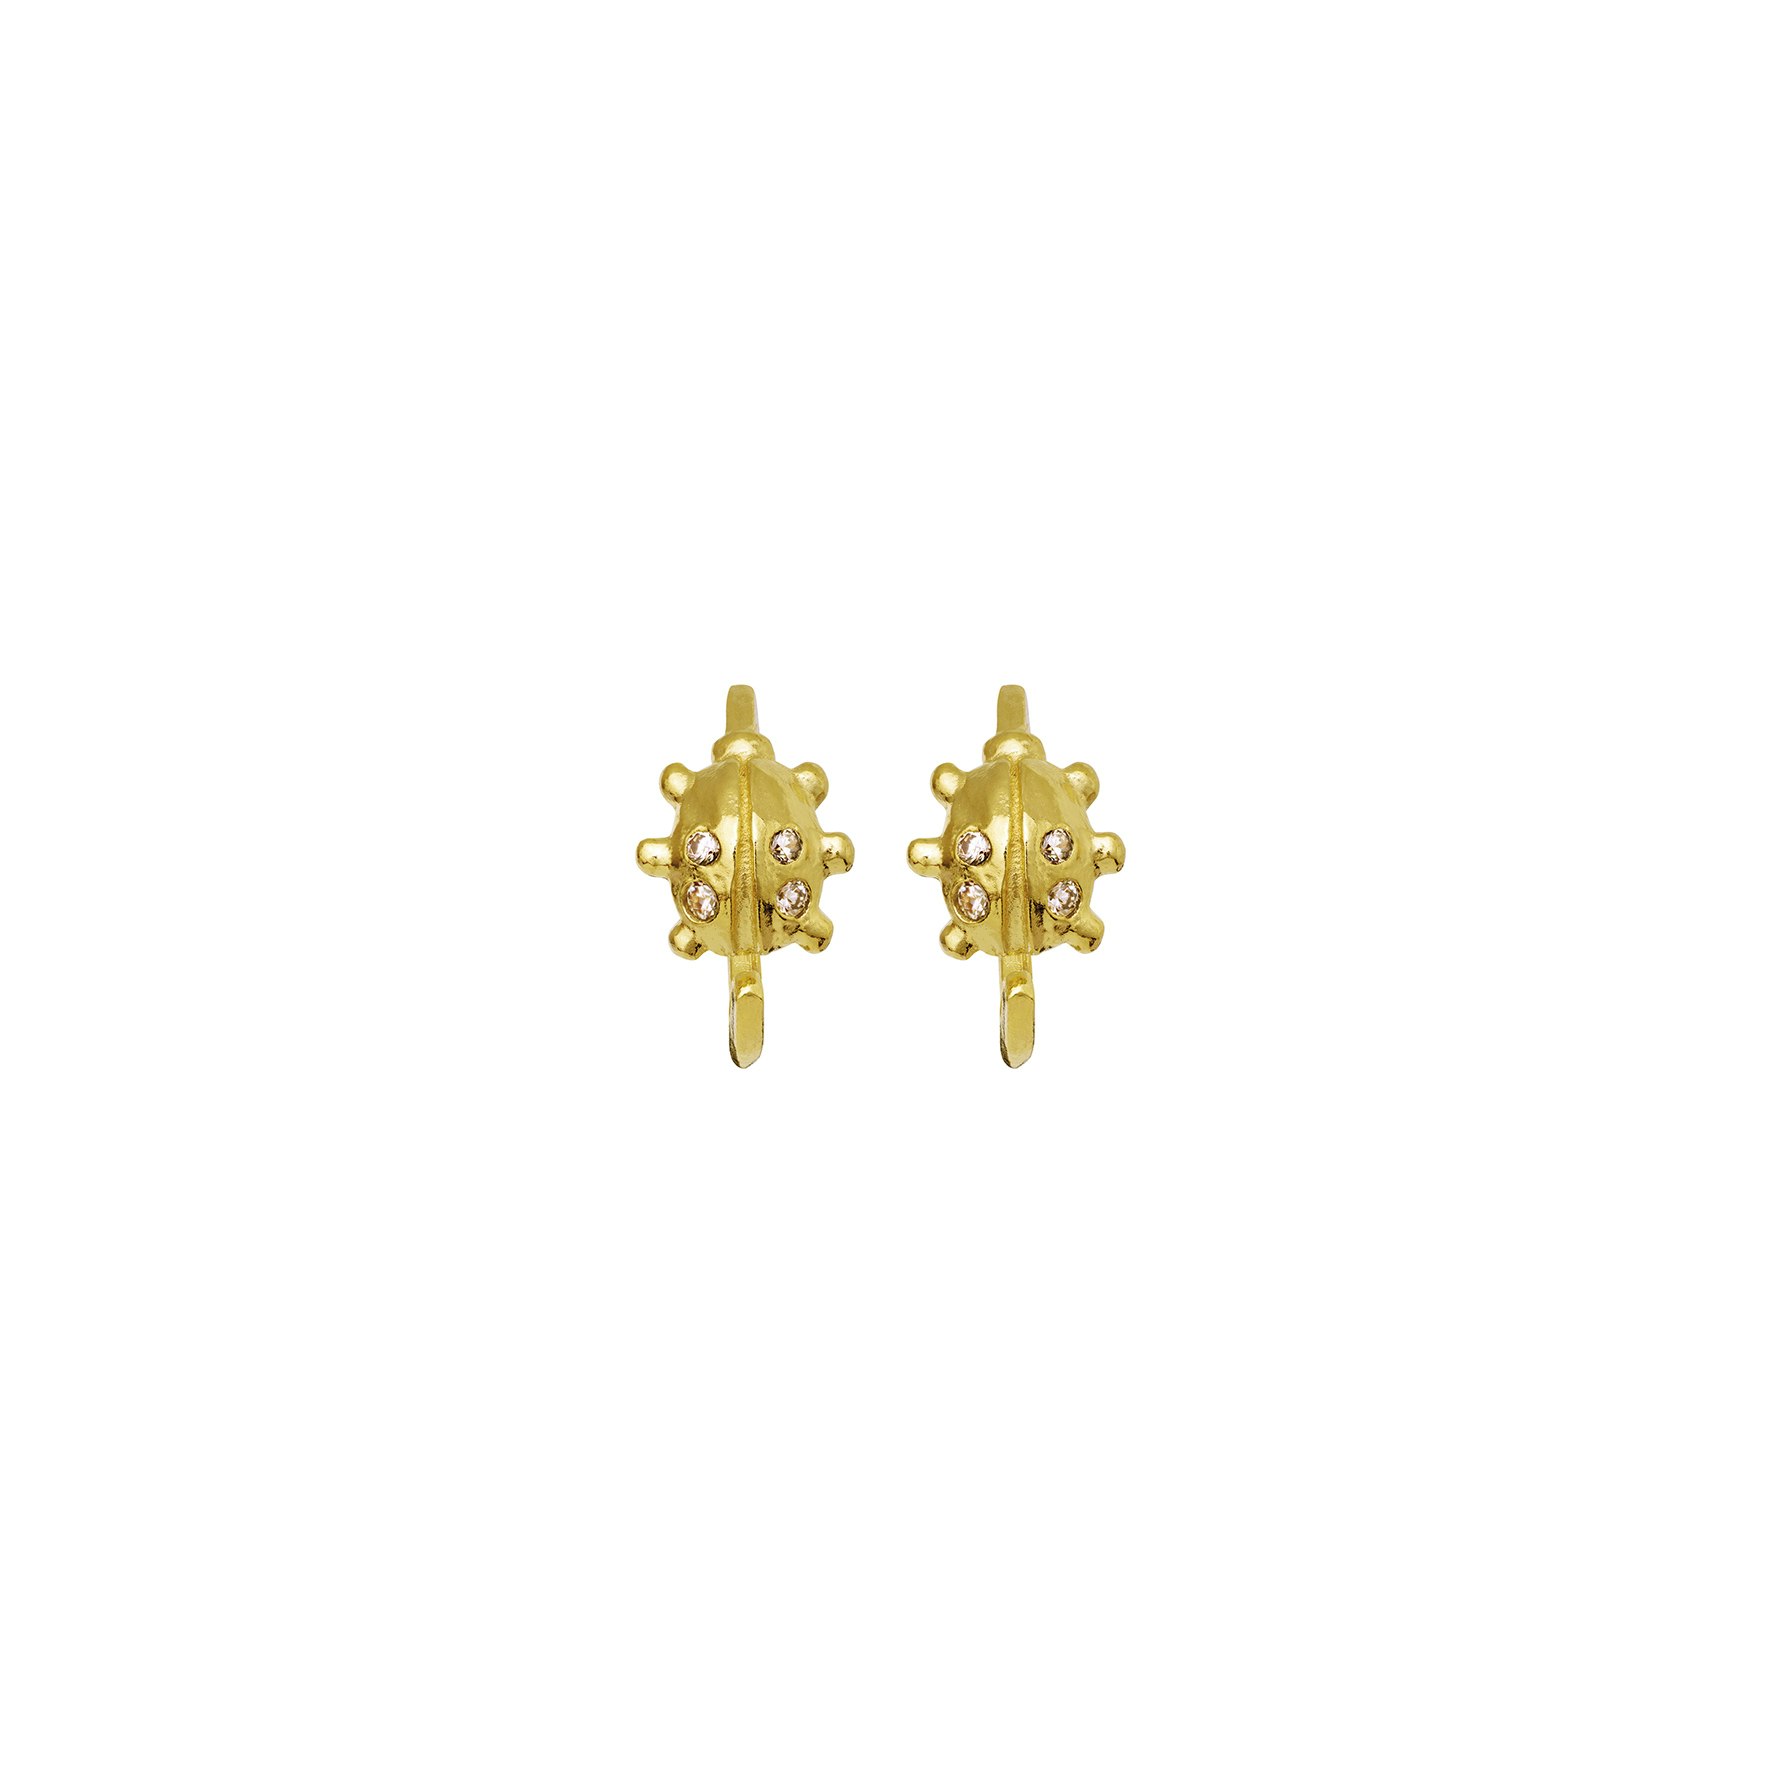 Ladybird Earrings von Maanesten in Vergoldet-Silber Sterling 925